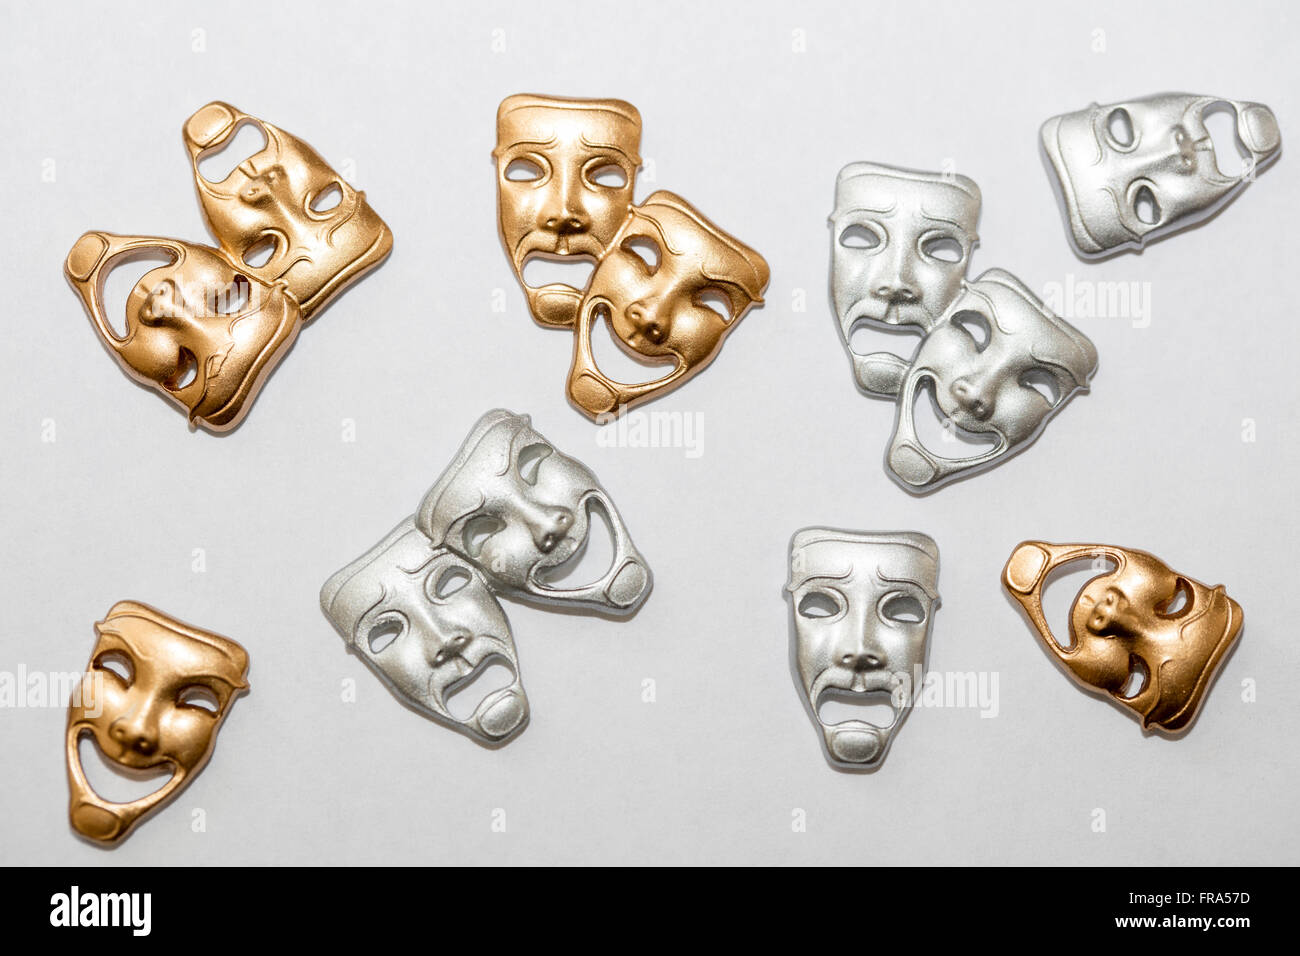 Máscaras de drama griego fotografías e imágenes de alta resolución - Alamy